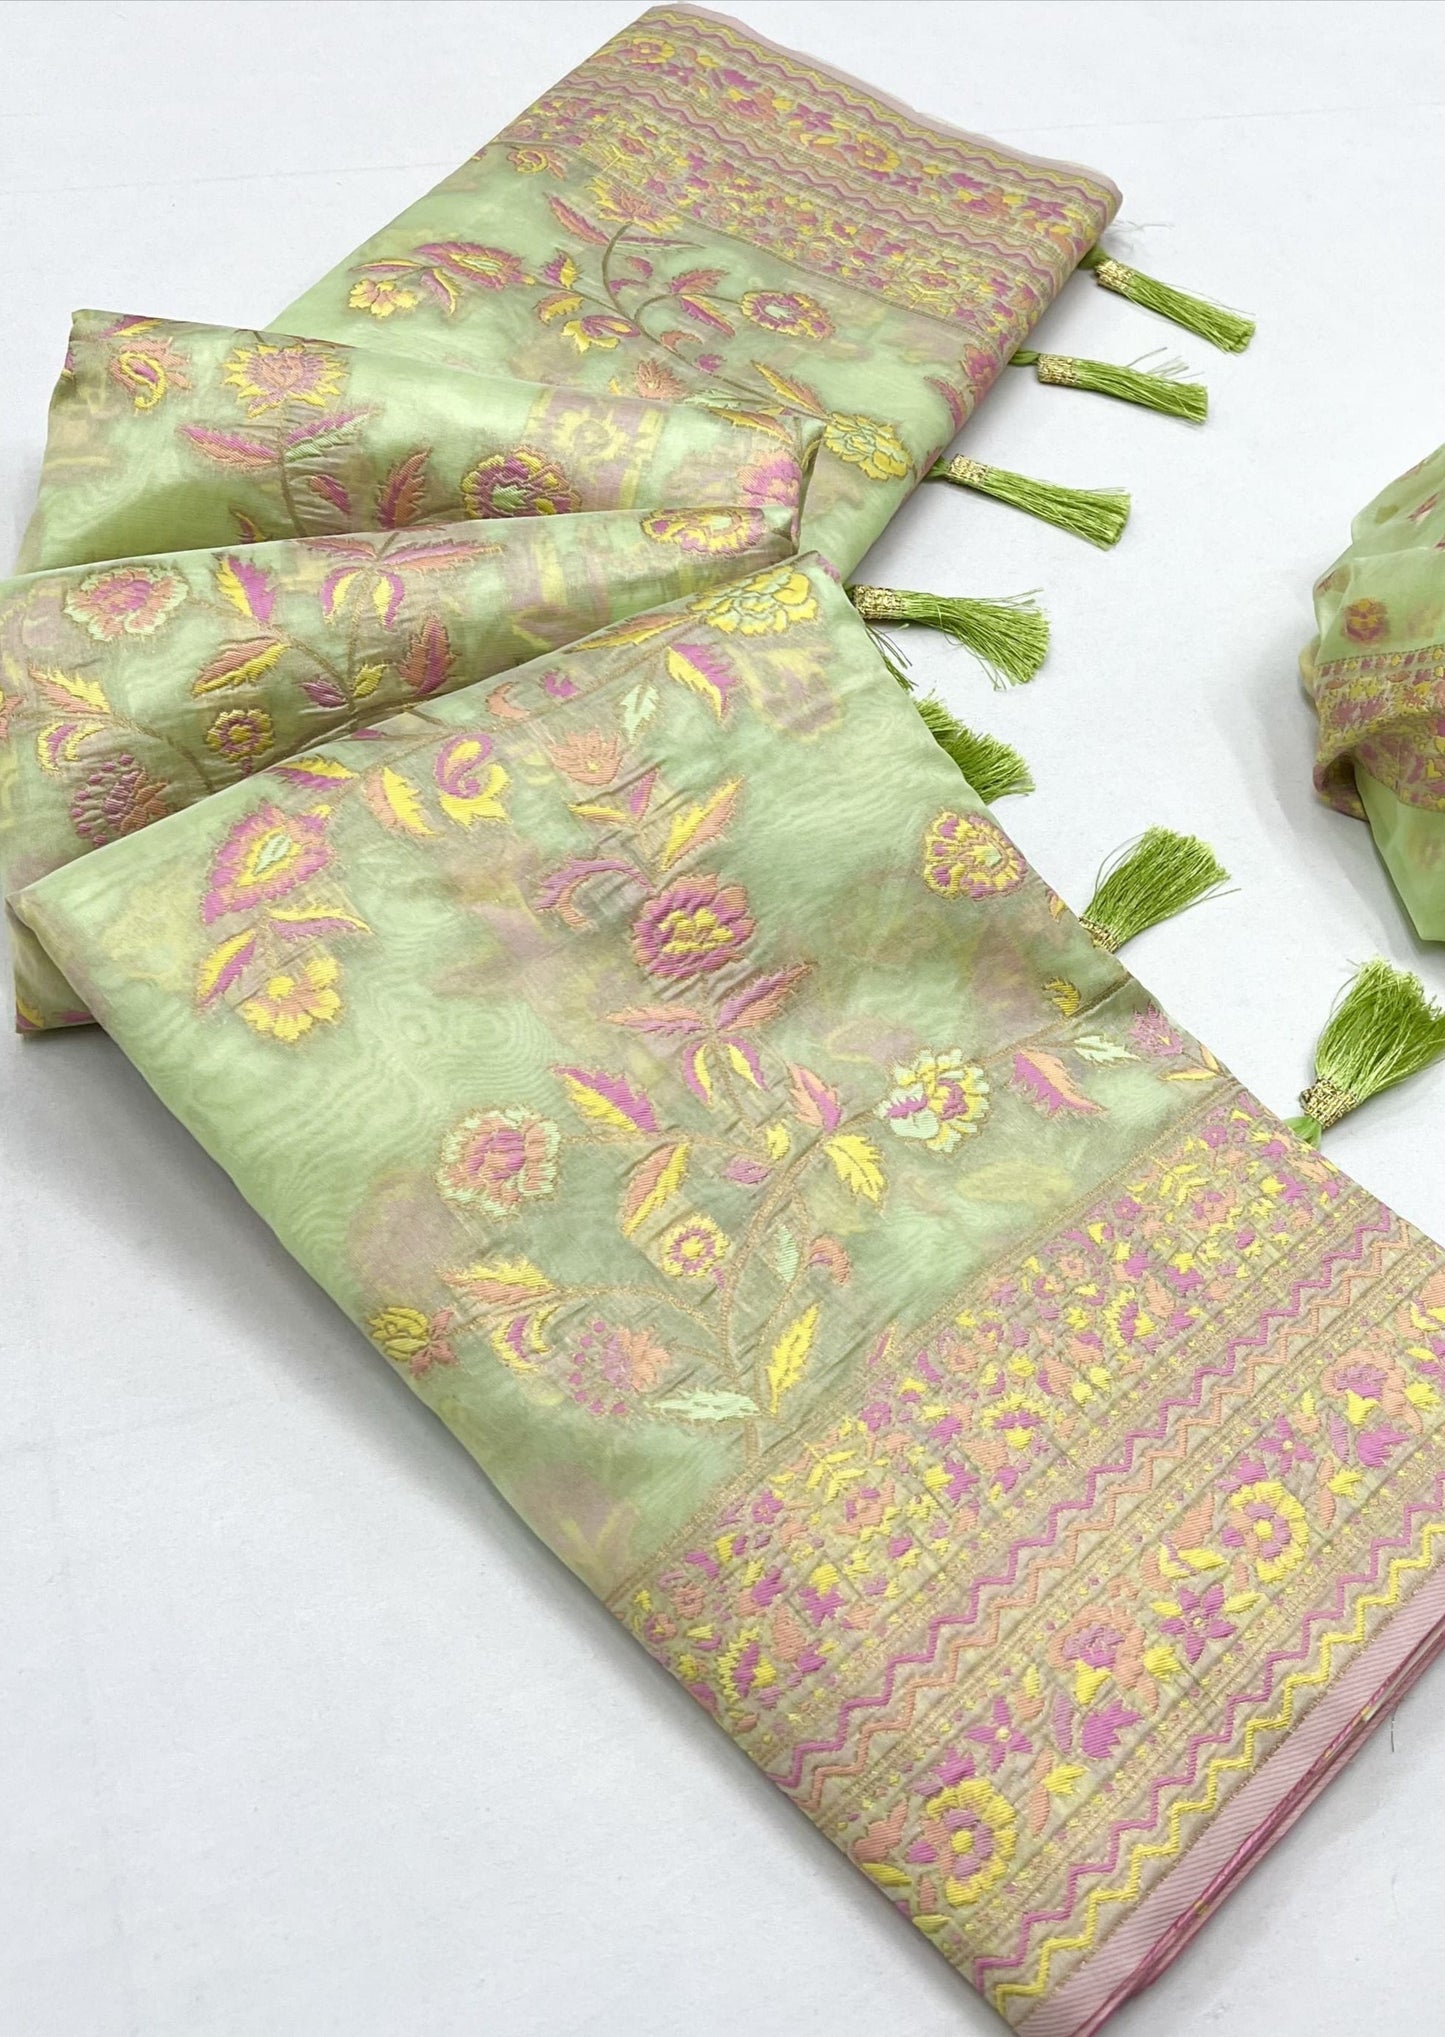 Kashmiri organza green embroidered saree online shopping price for bride wedding.